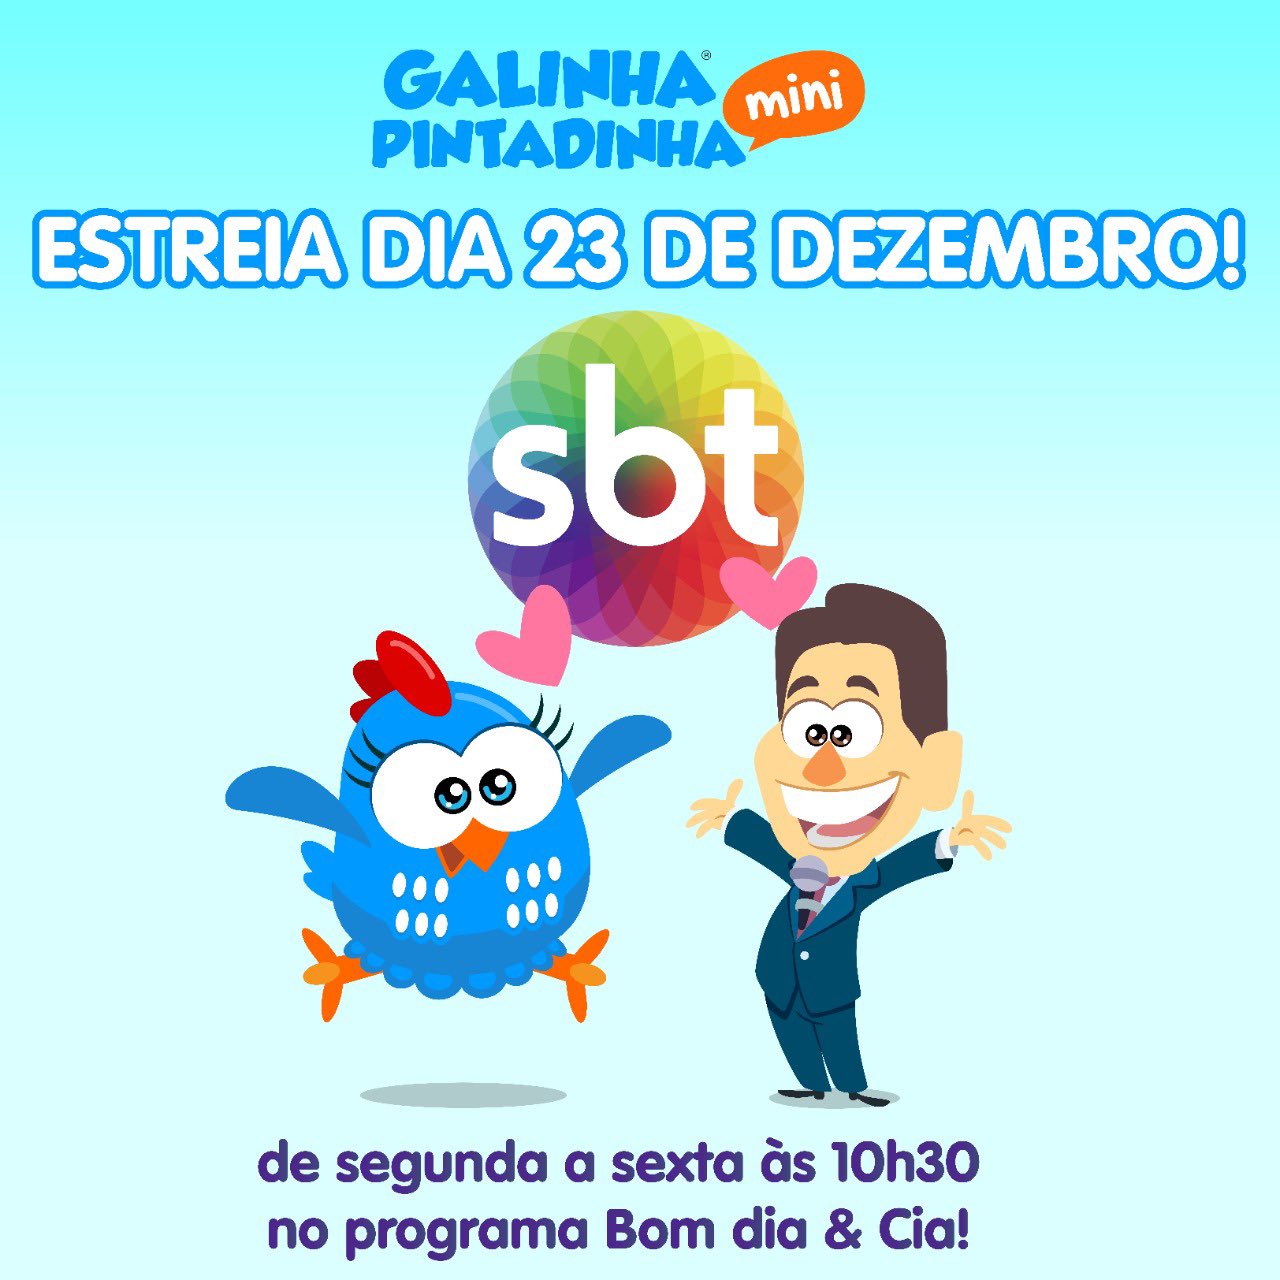 Galinha Pintadinha on Twitter: 